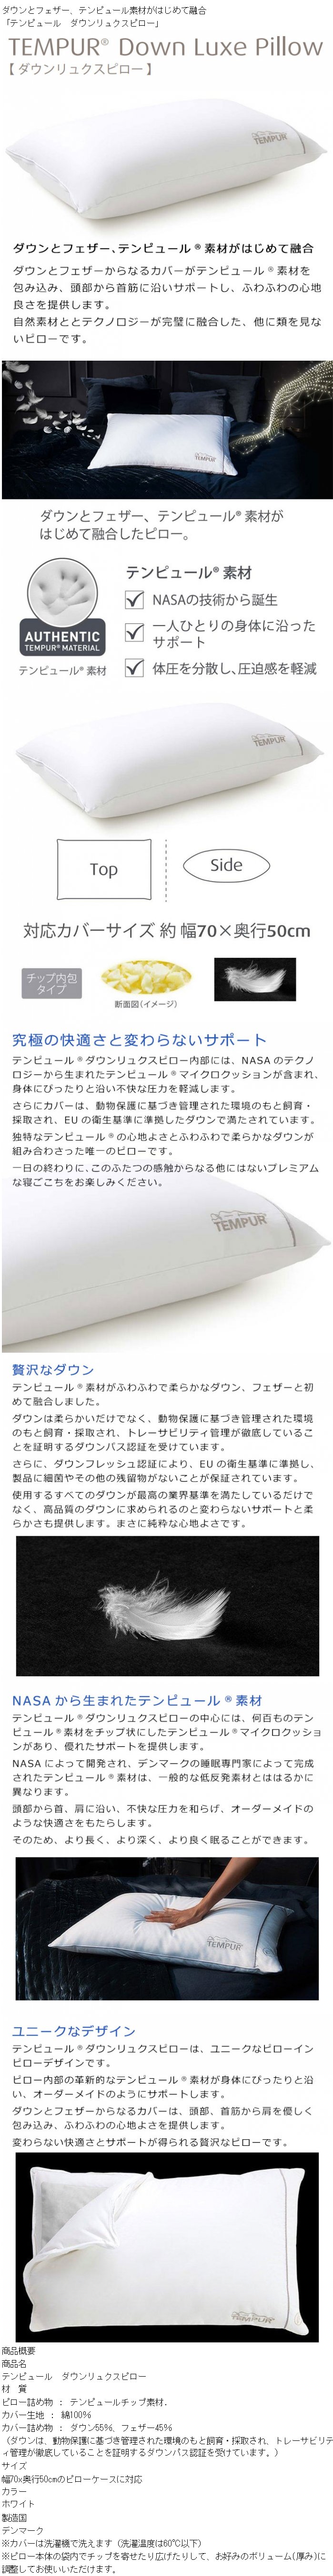 TEMPUR Down Luxe Pillow テンピュール ダウンリュクスピロー 約幅70